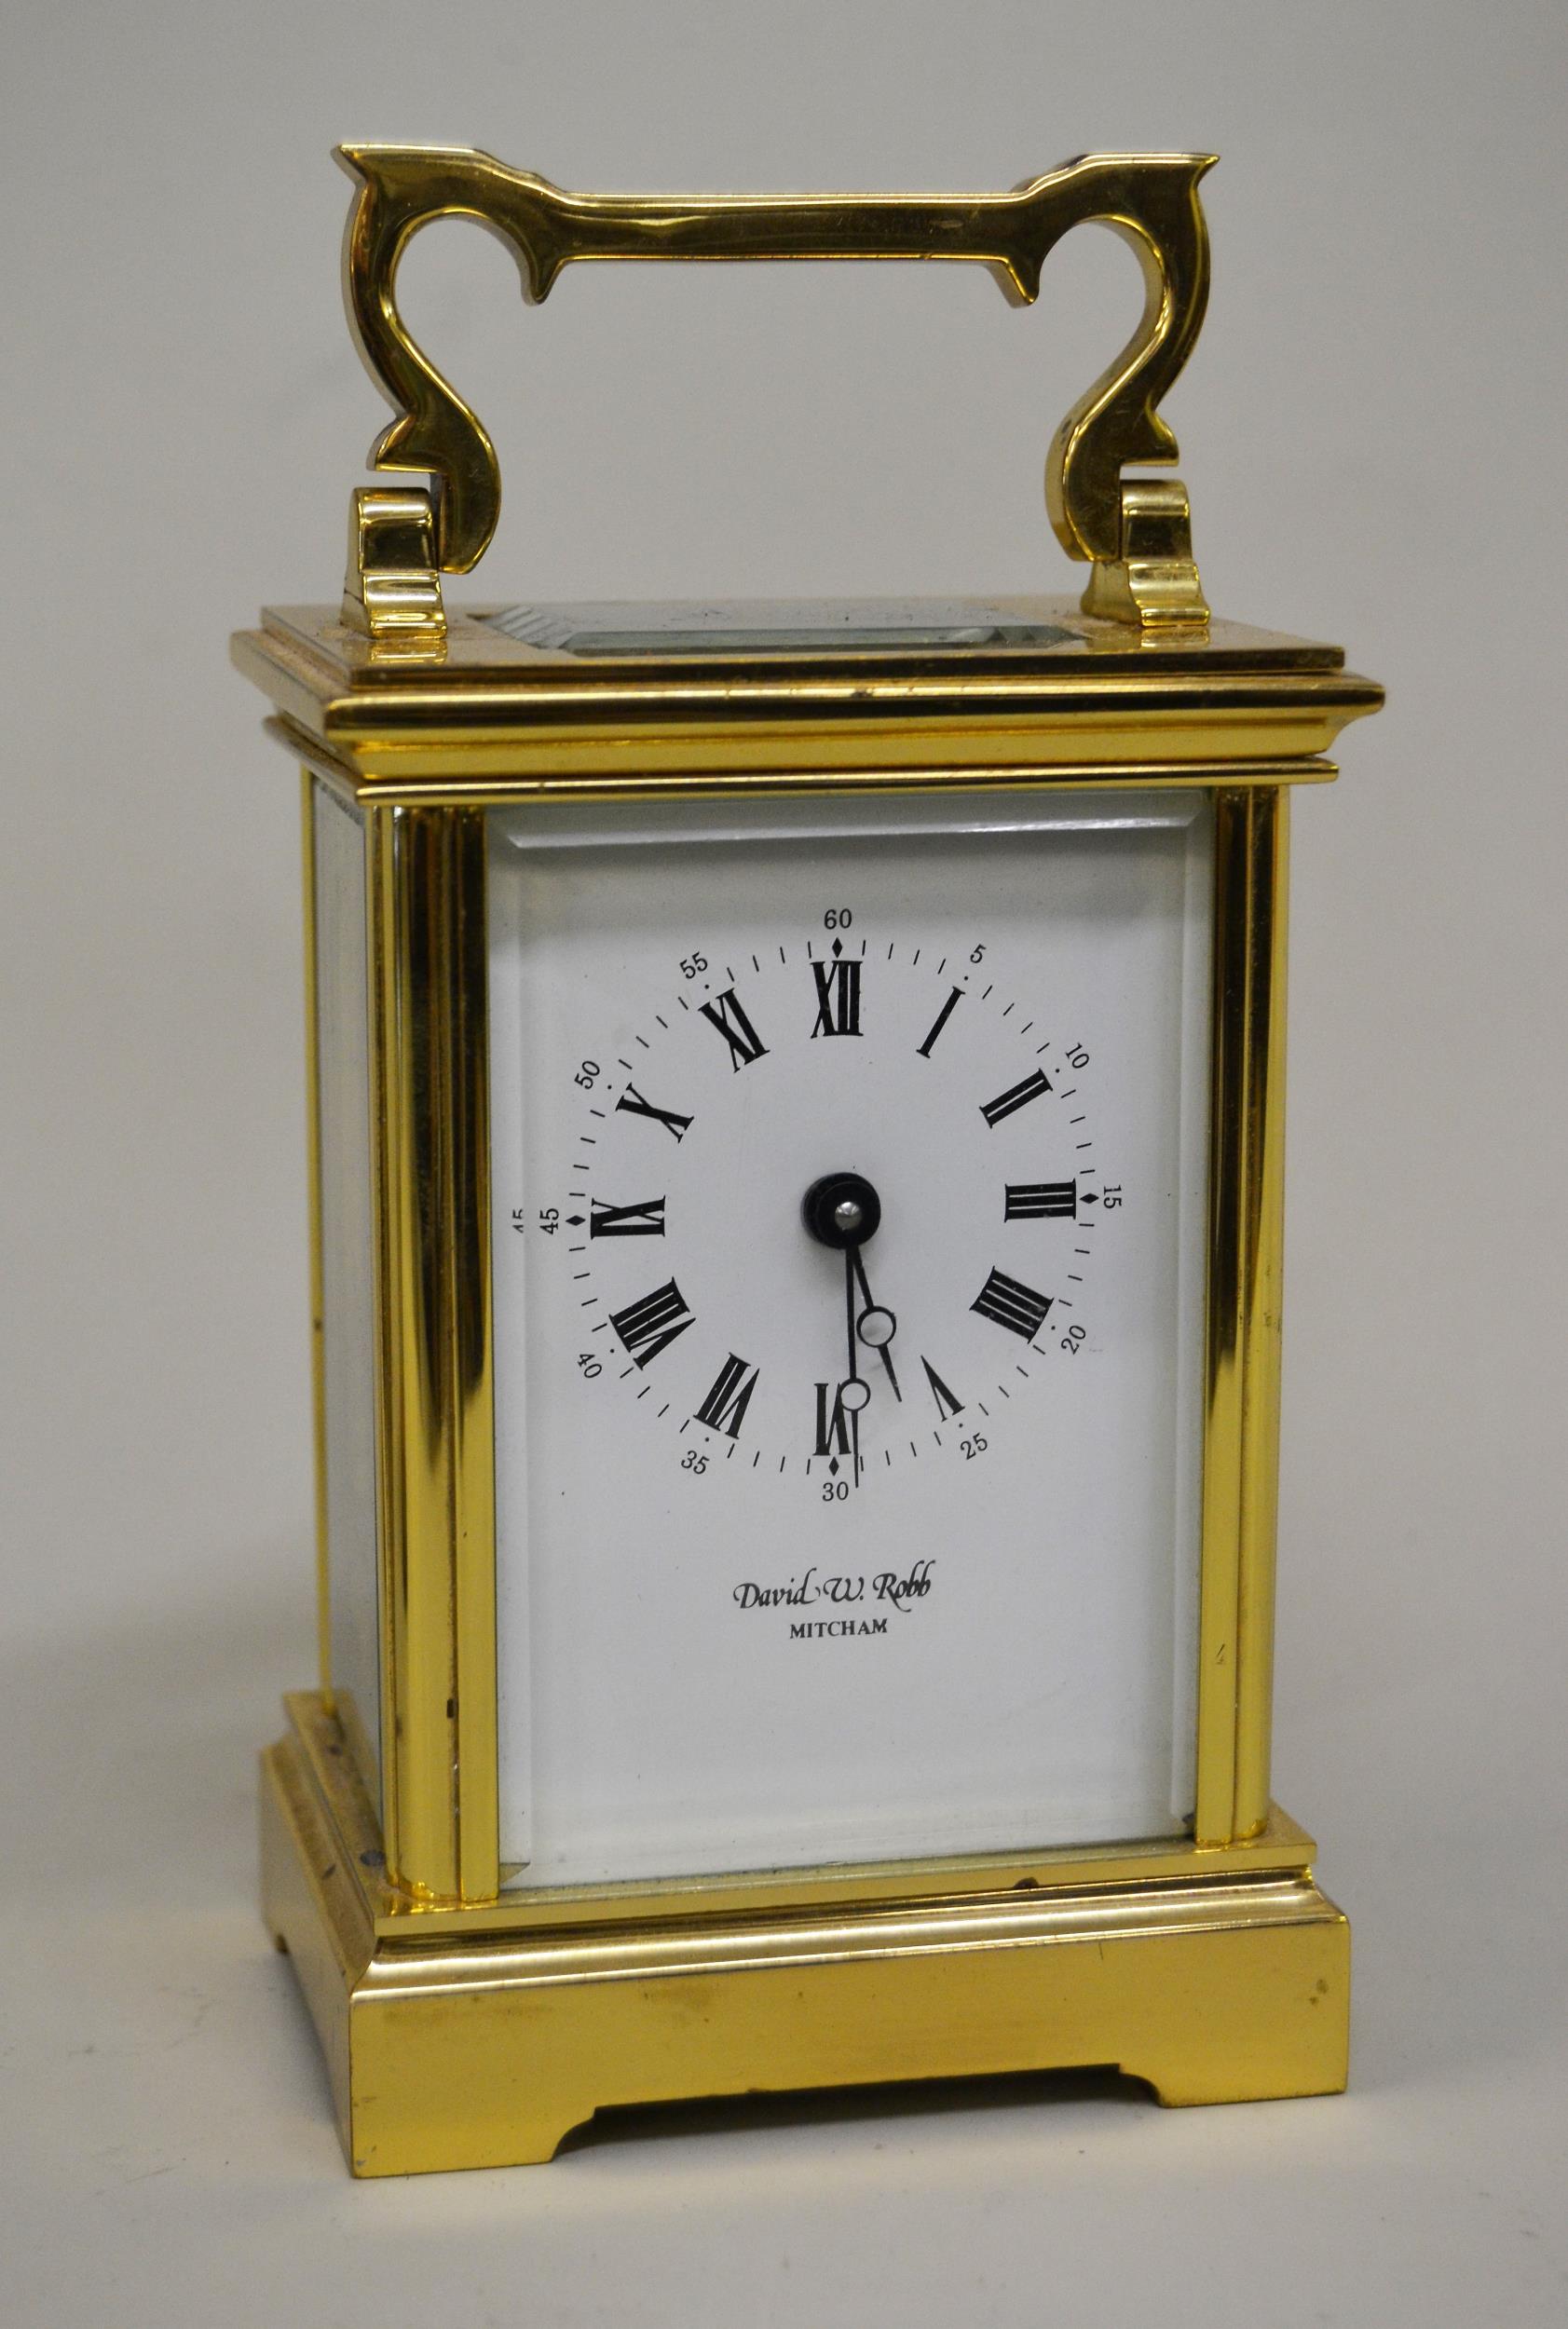 French gilt brass carriage clock, the enamel dial inscribed David W. Robb, Mitcham